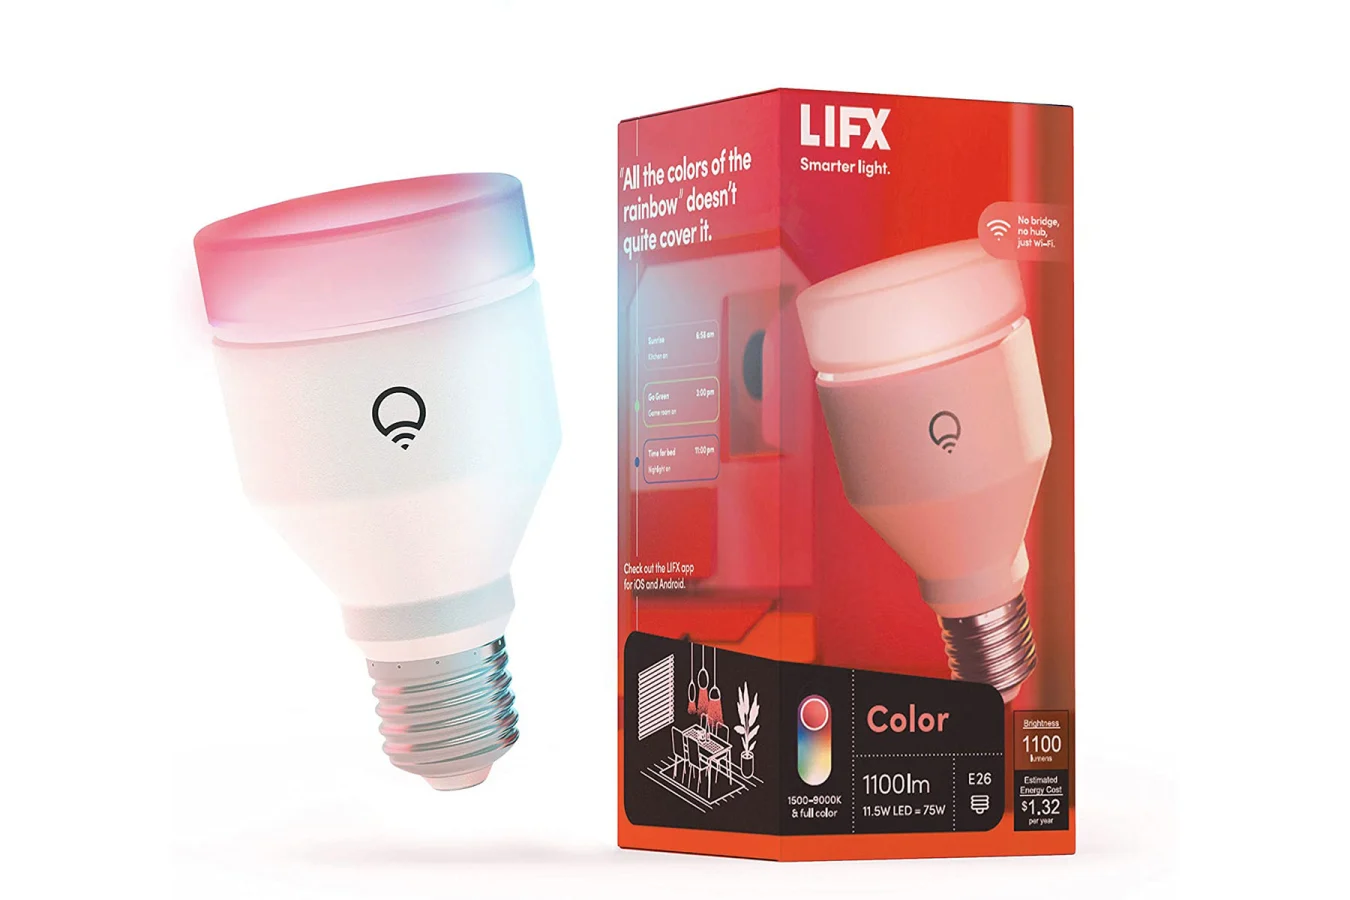 LIFX's Color E26 smart light bulb outside of its box on a white background.